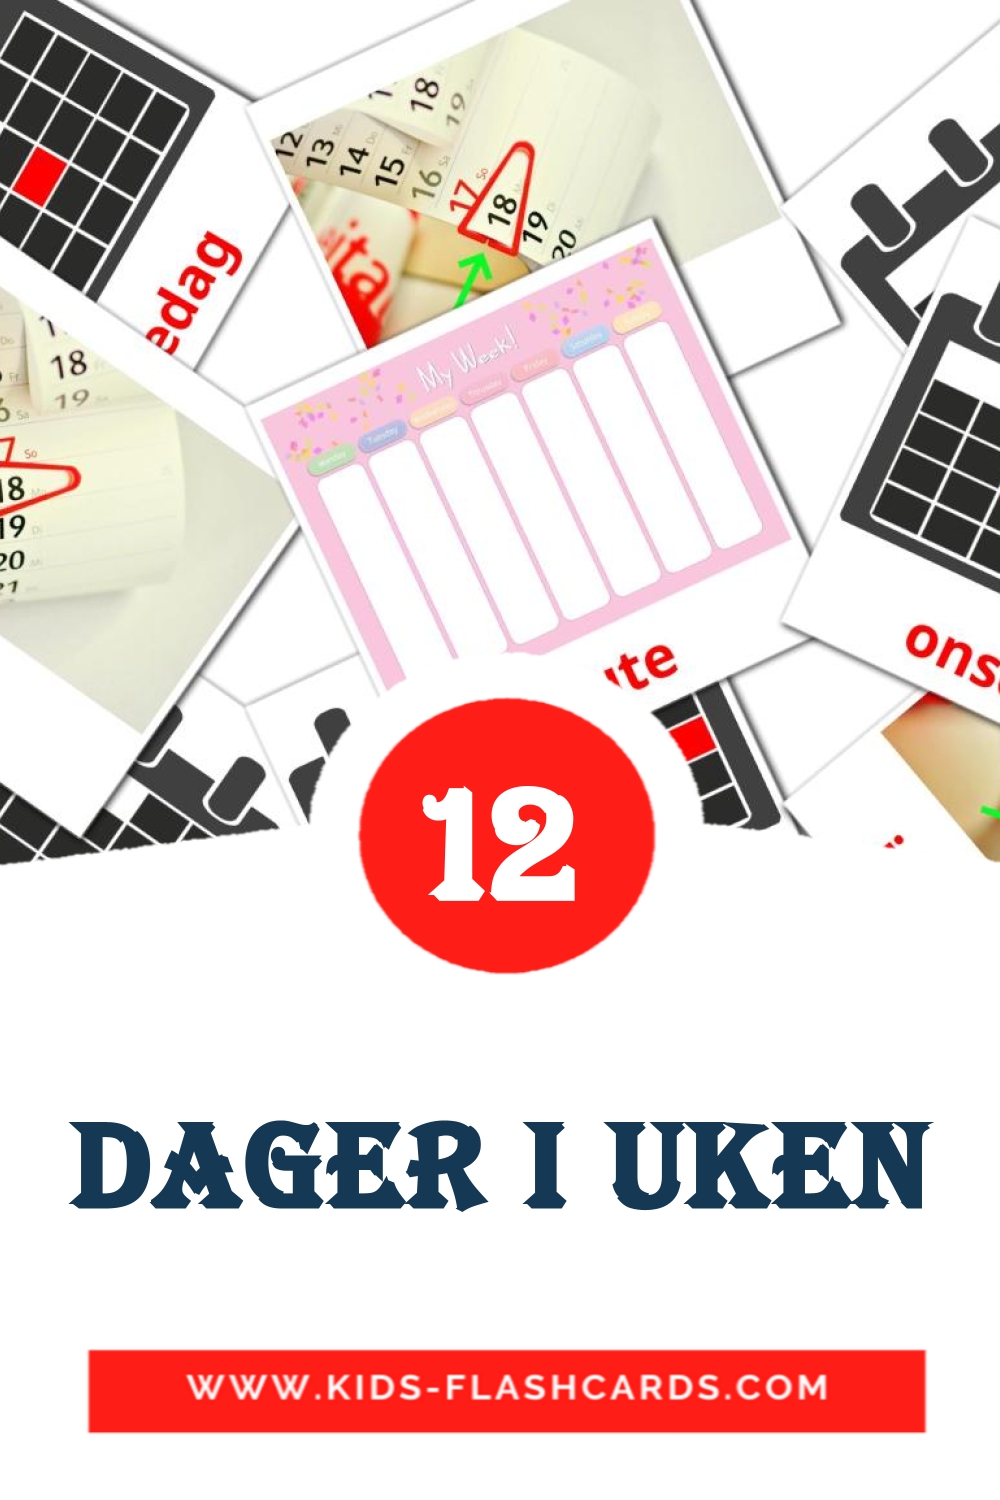 12 carte illustrate di Dager i uken per la scuola materna in norvegese